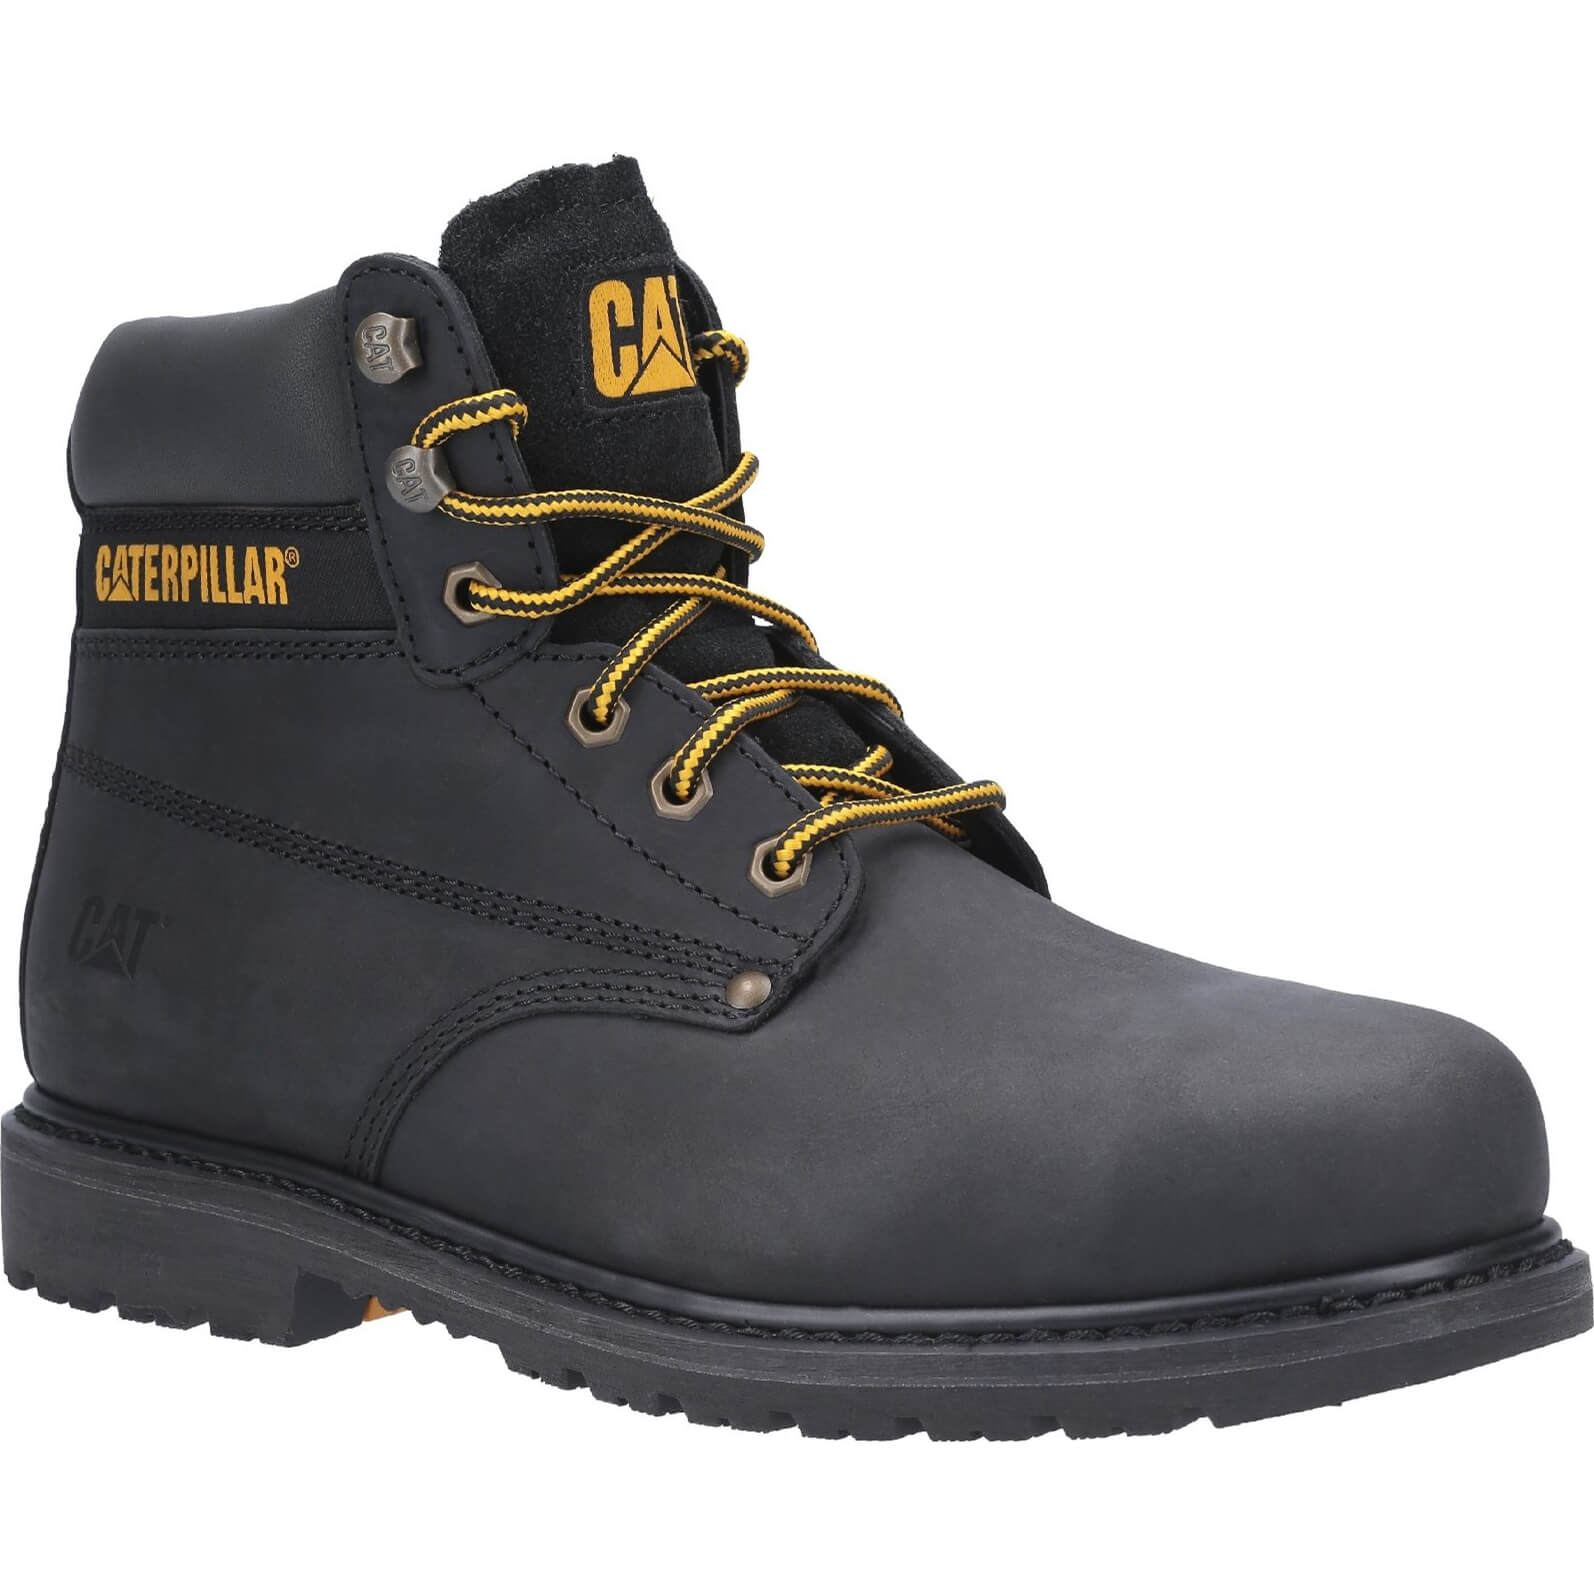 Caterpillar Powerplant GYW Safety Boot Black Size 7